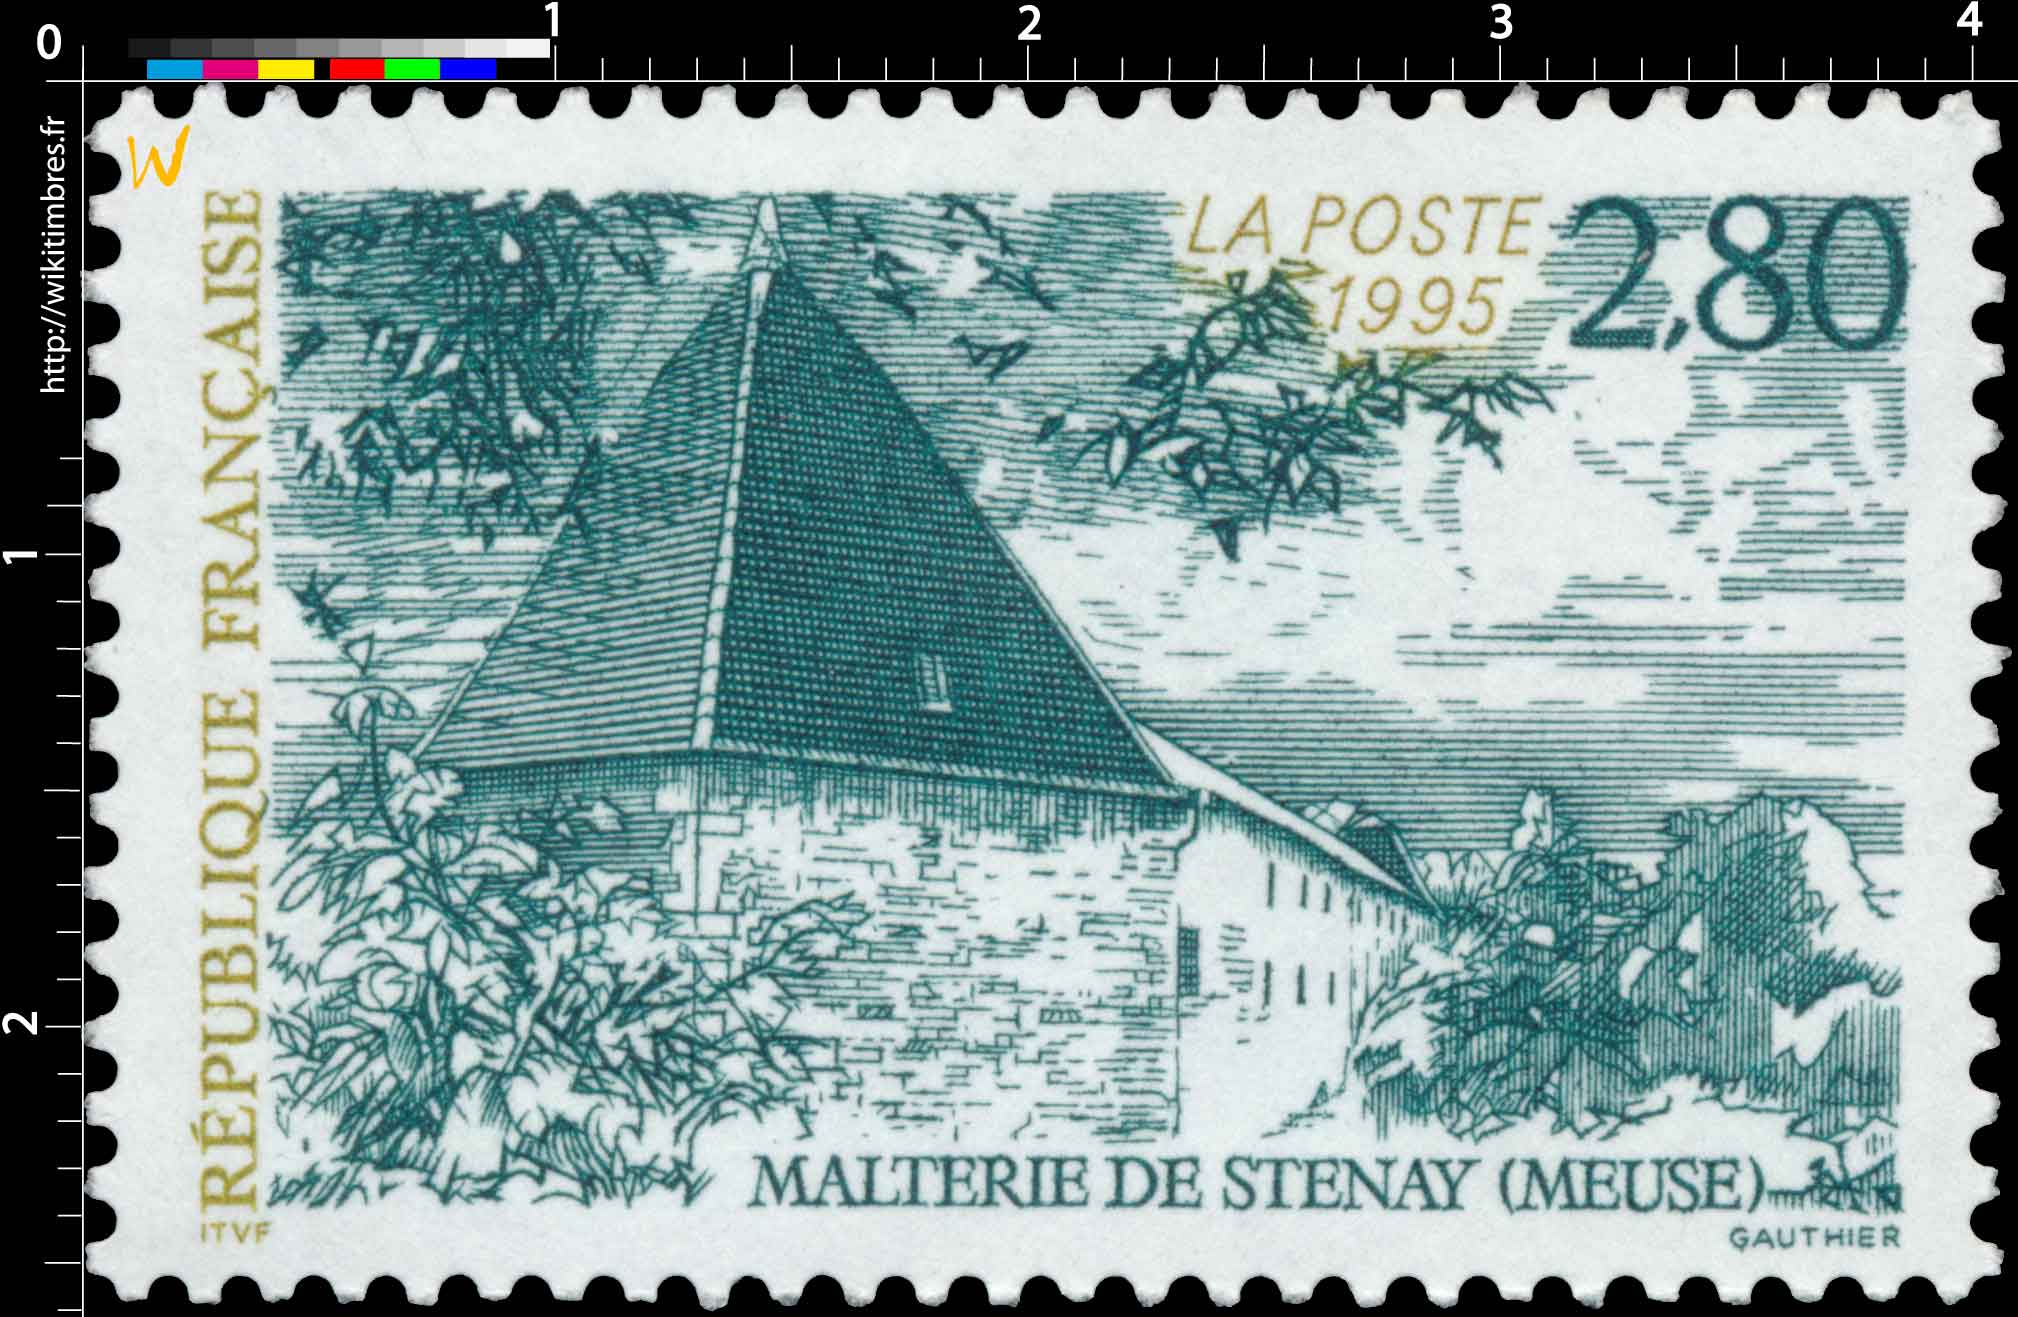 1995 MALTERIE DE STENAY (MEUSE)